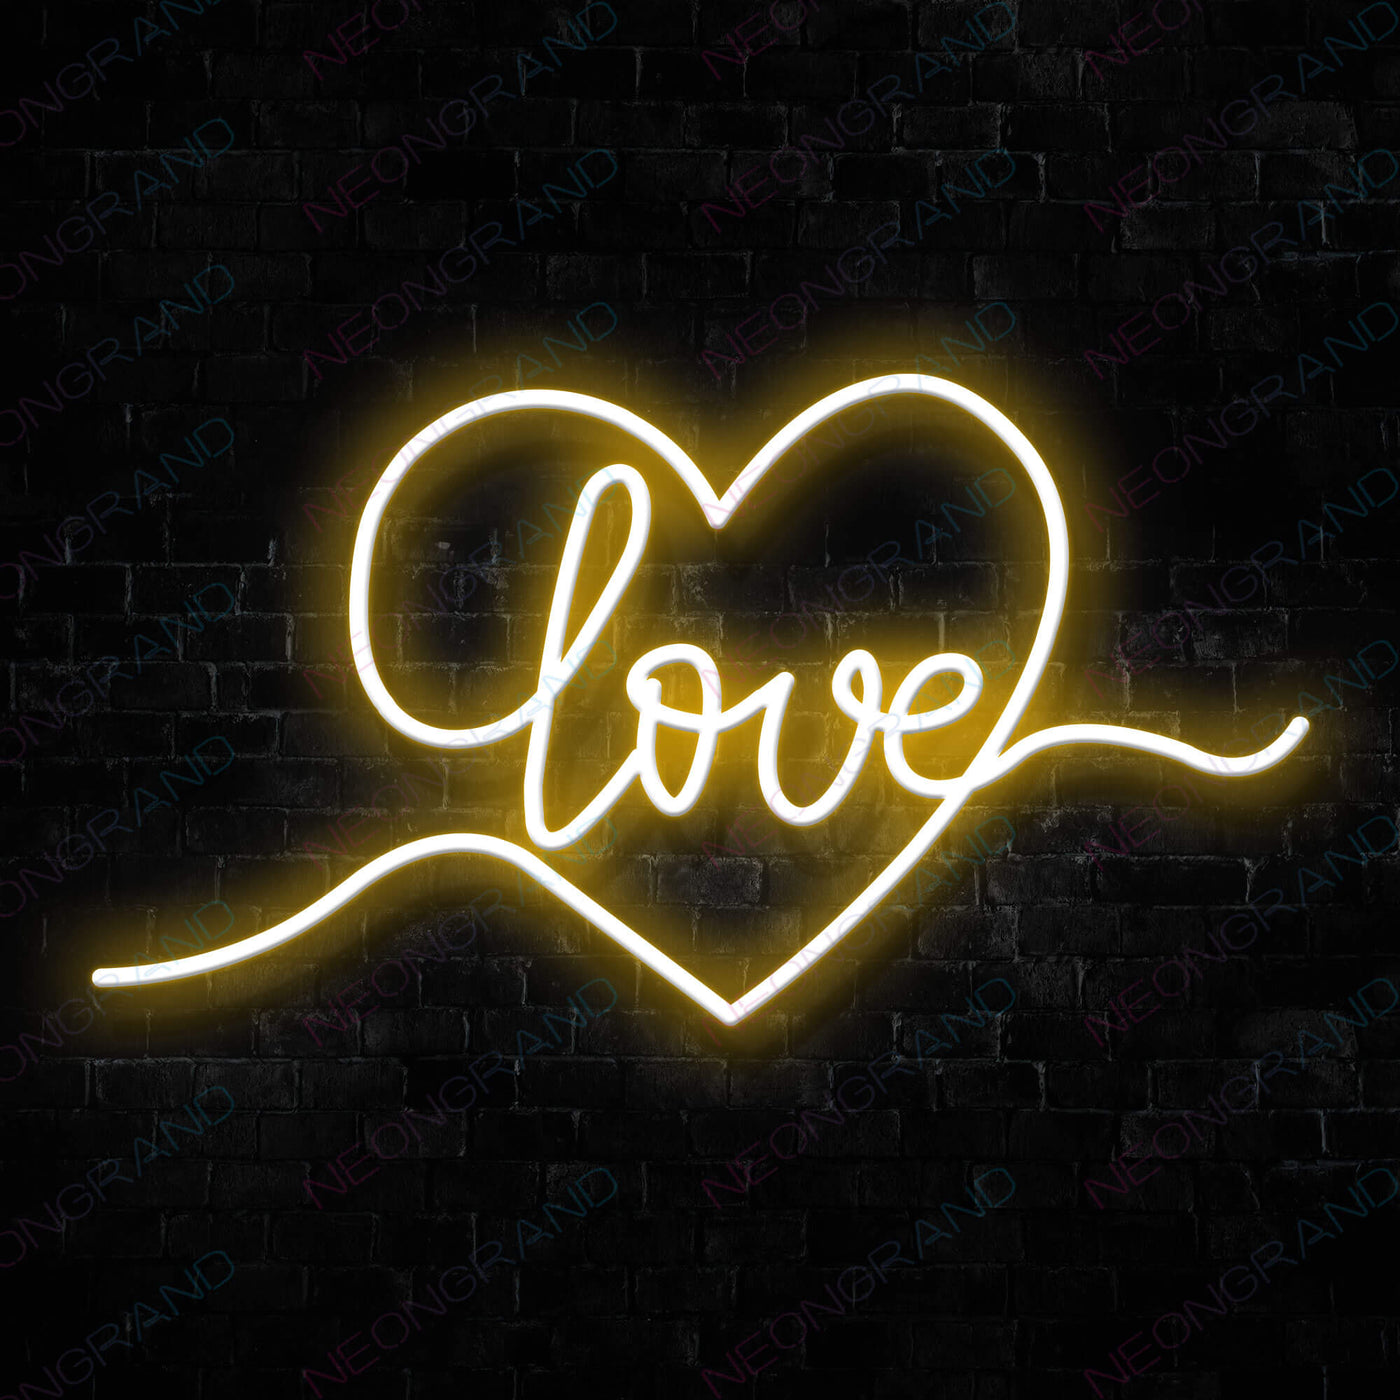 Heart Love Neon Sign Led Light orang yellow